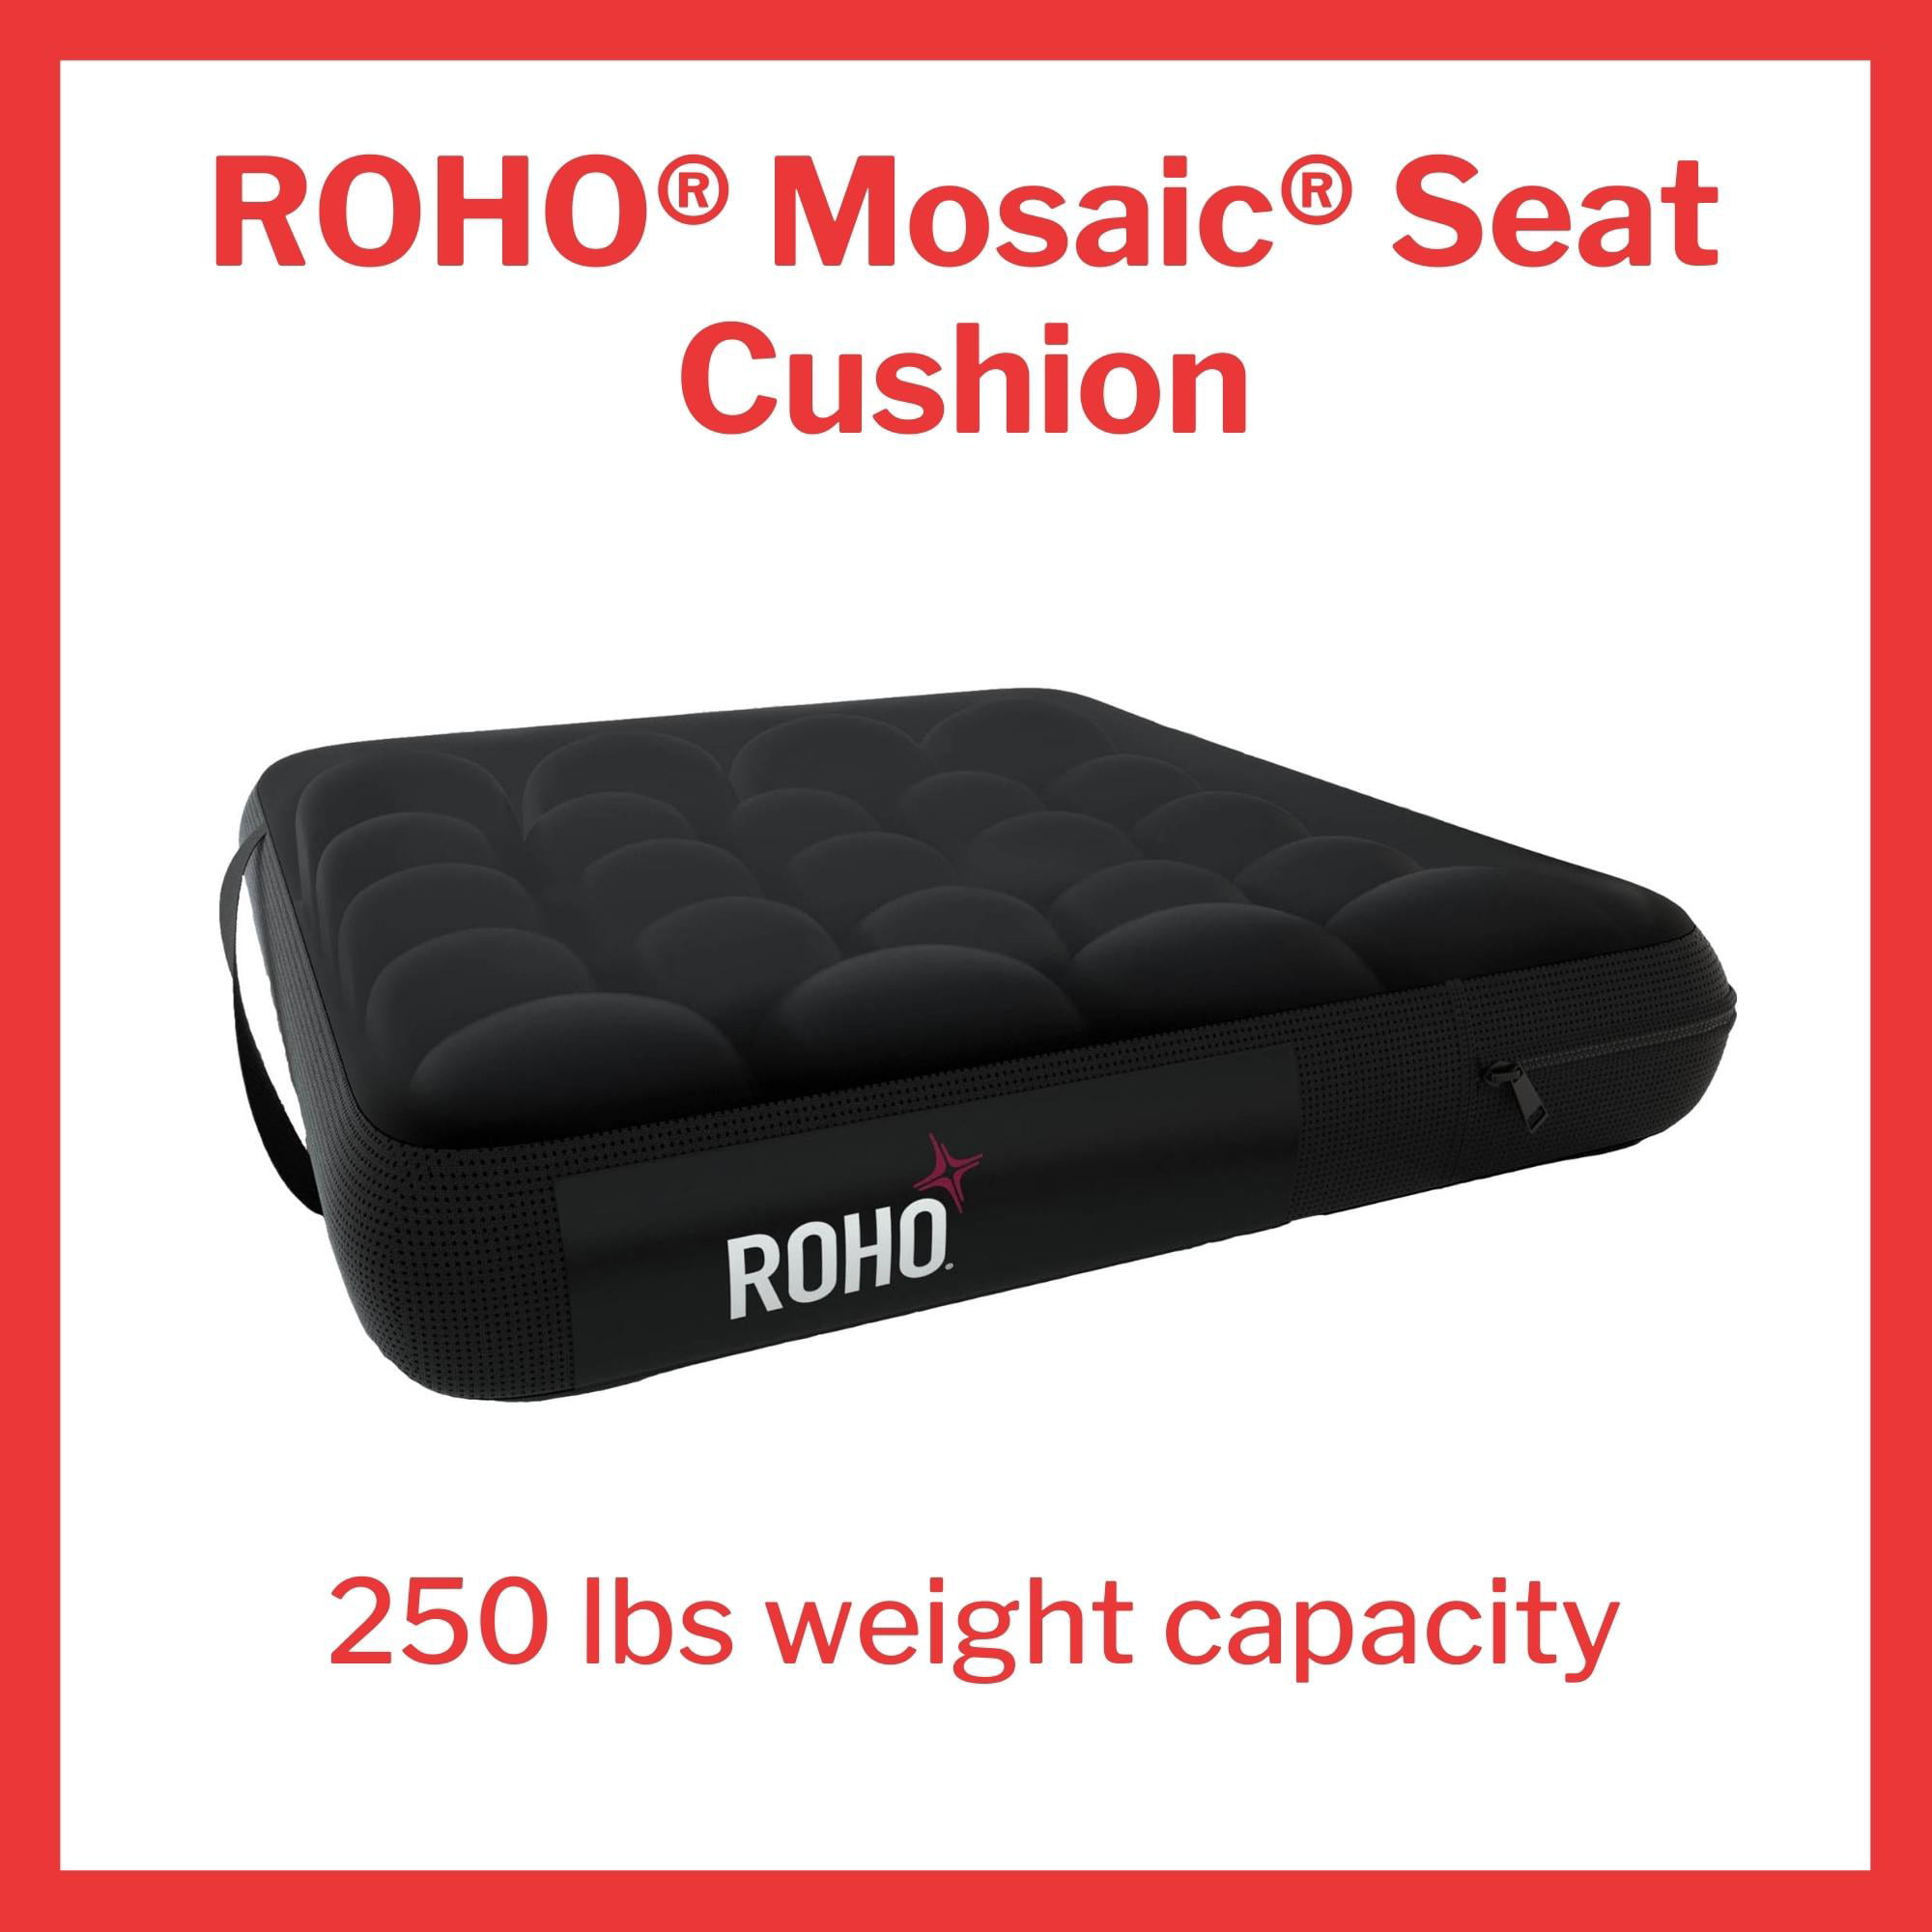 ROHO Mosaic Cushion